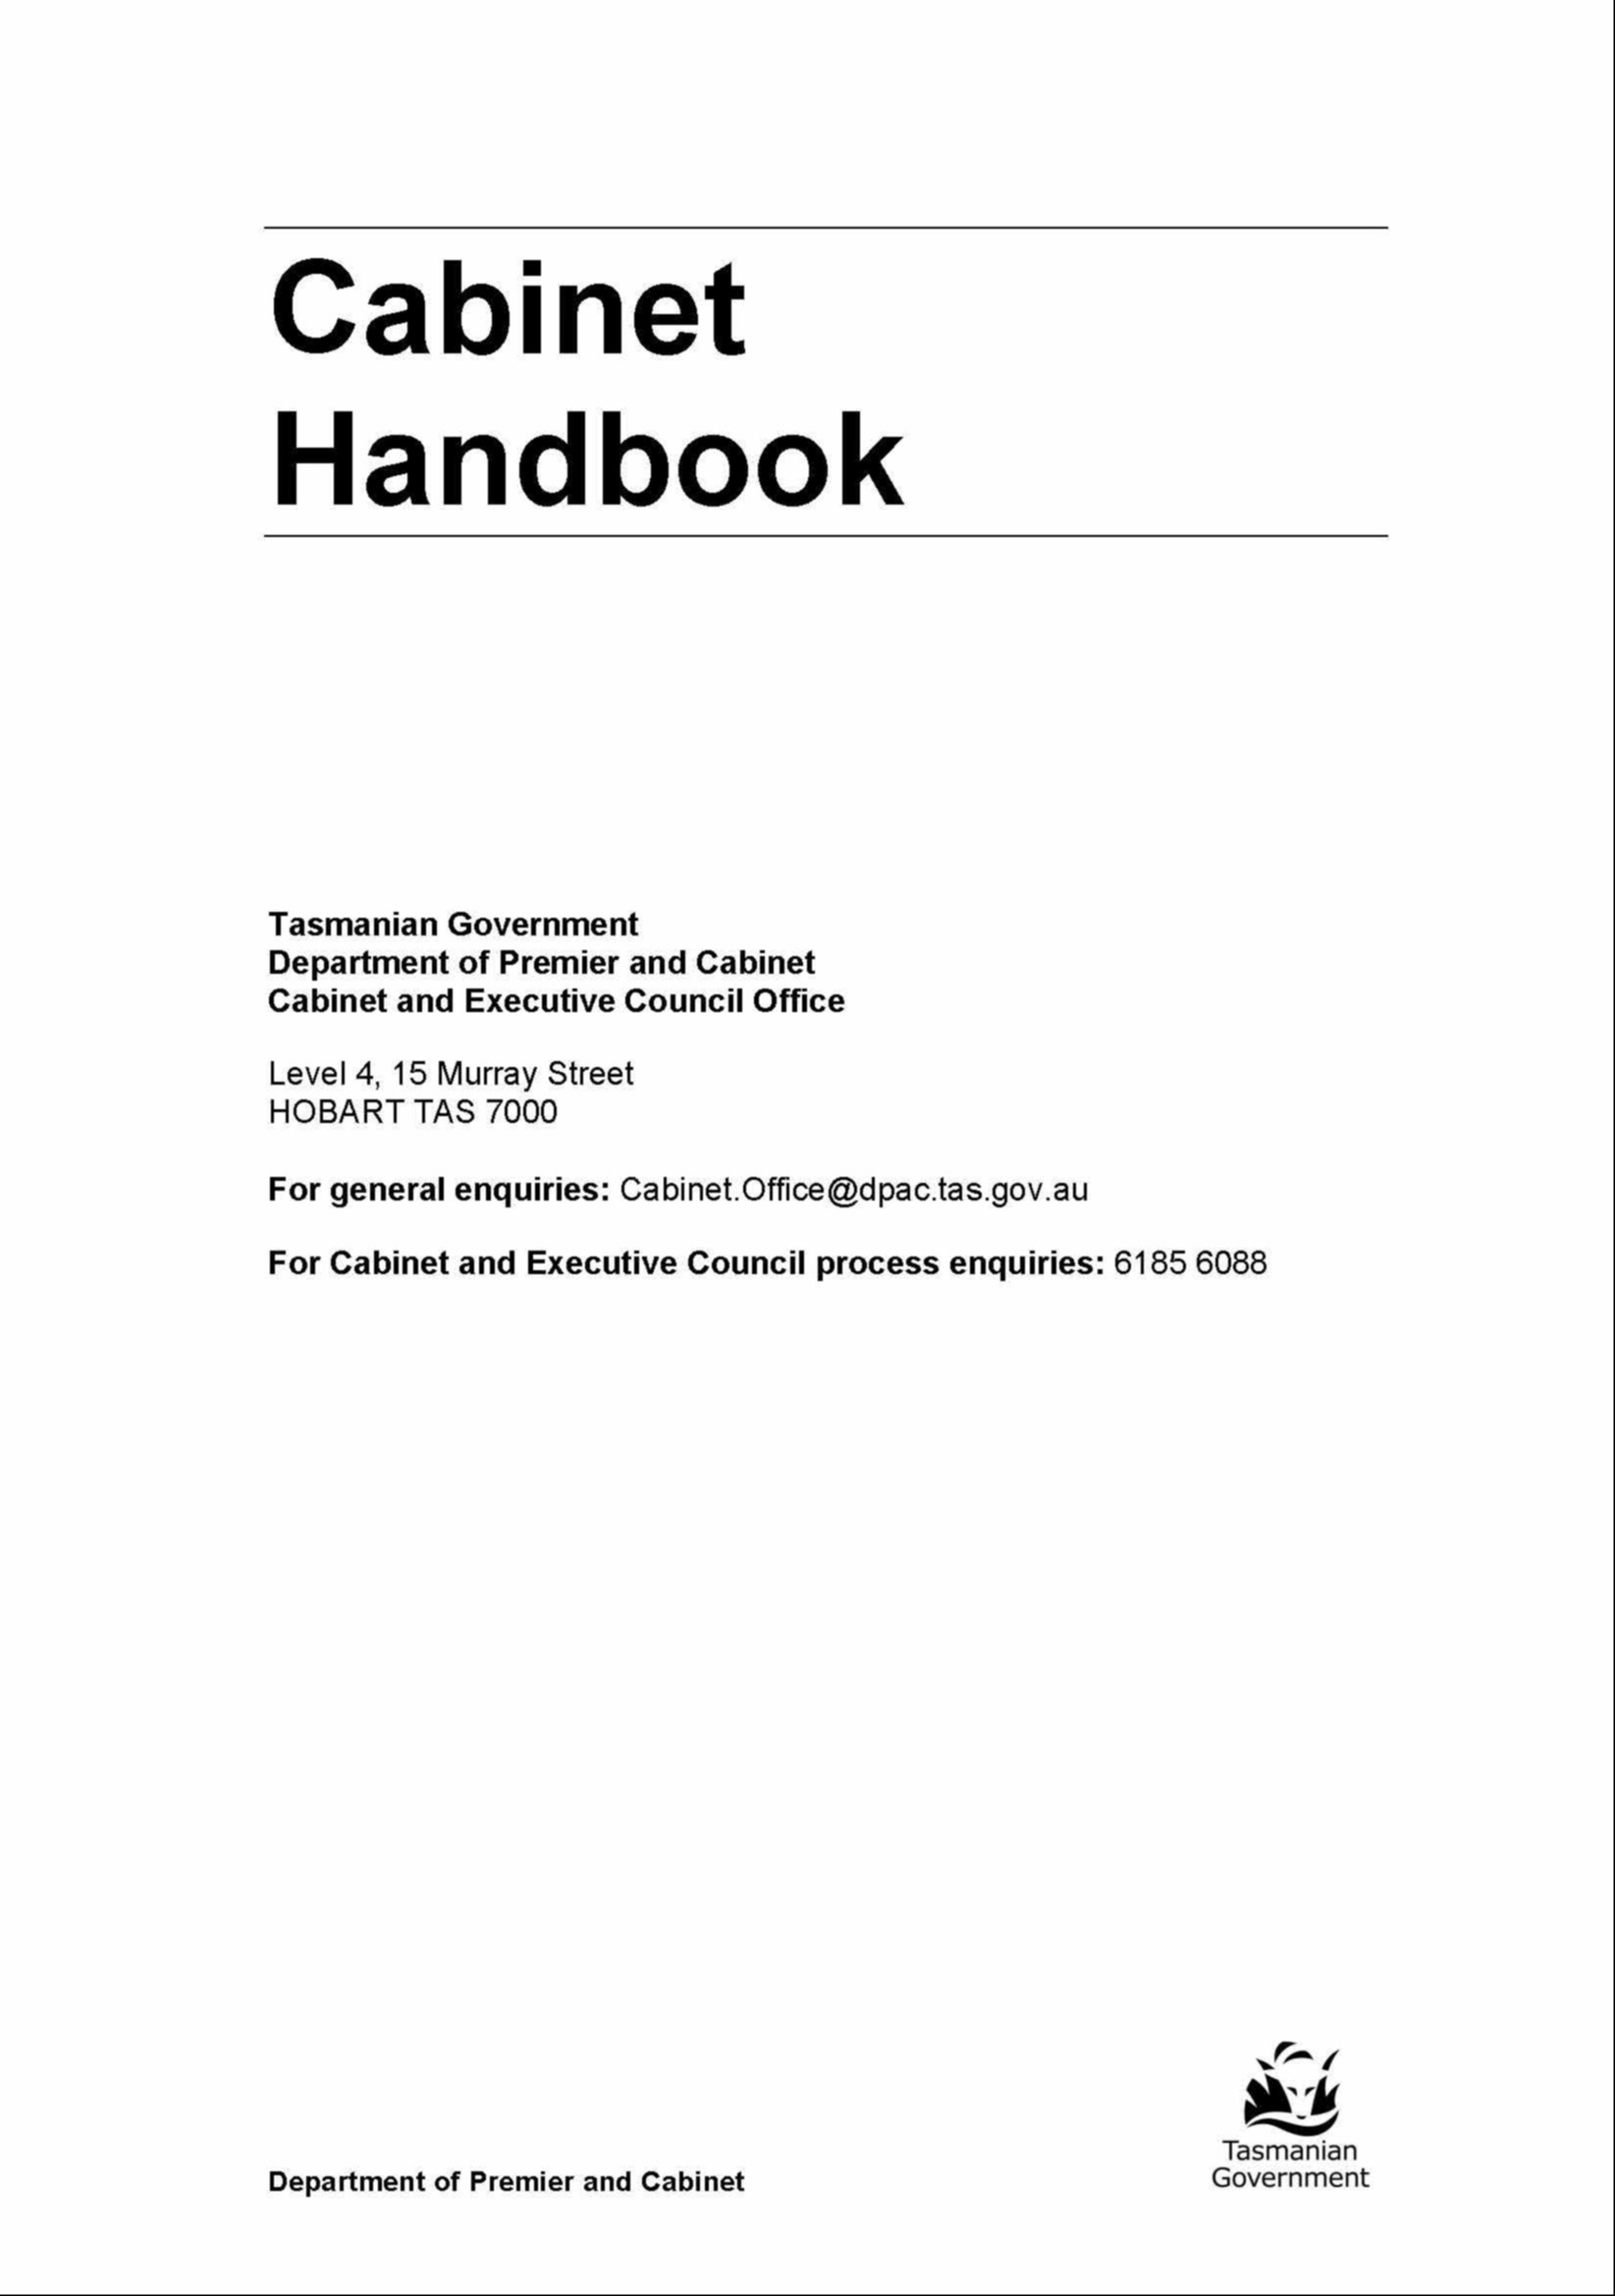 Download the Cabinet Handbook